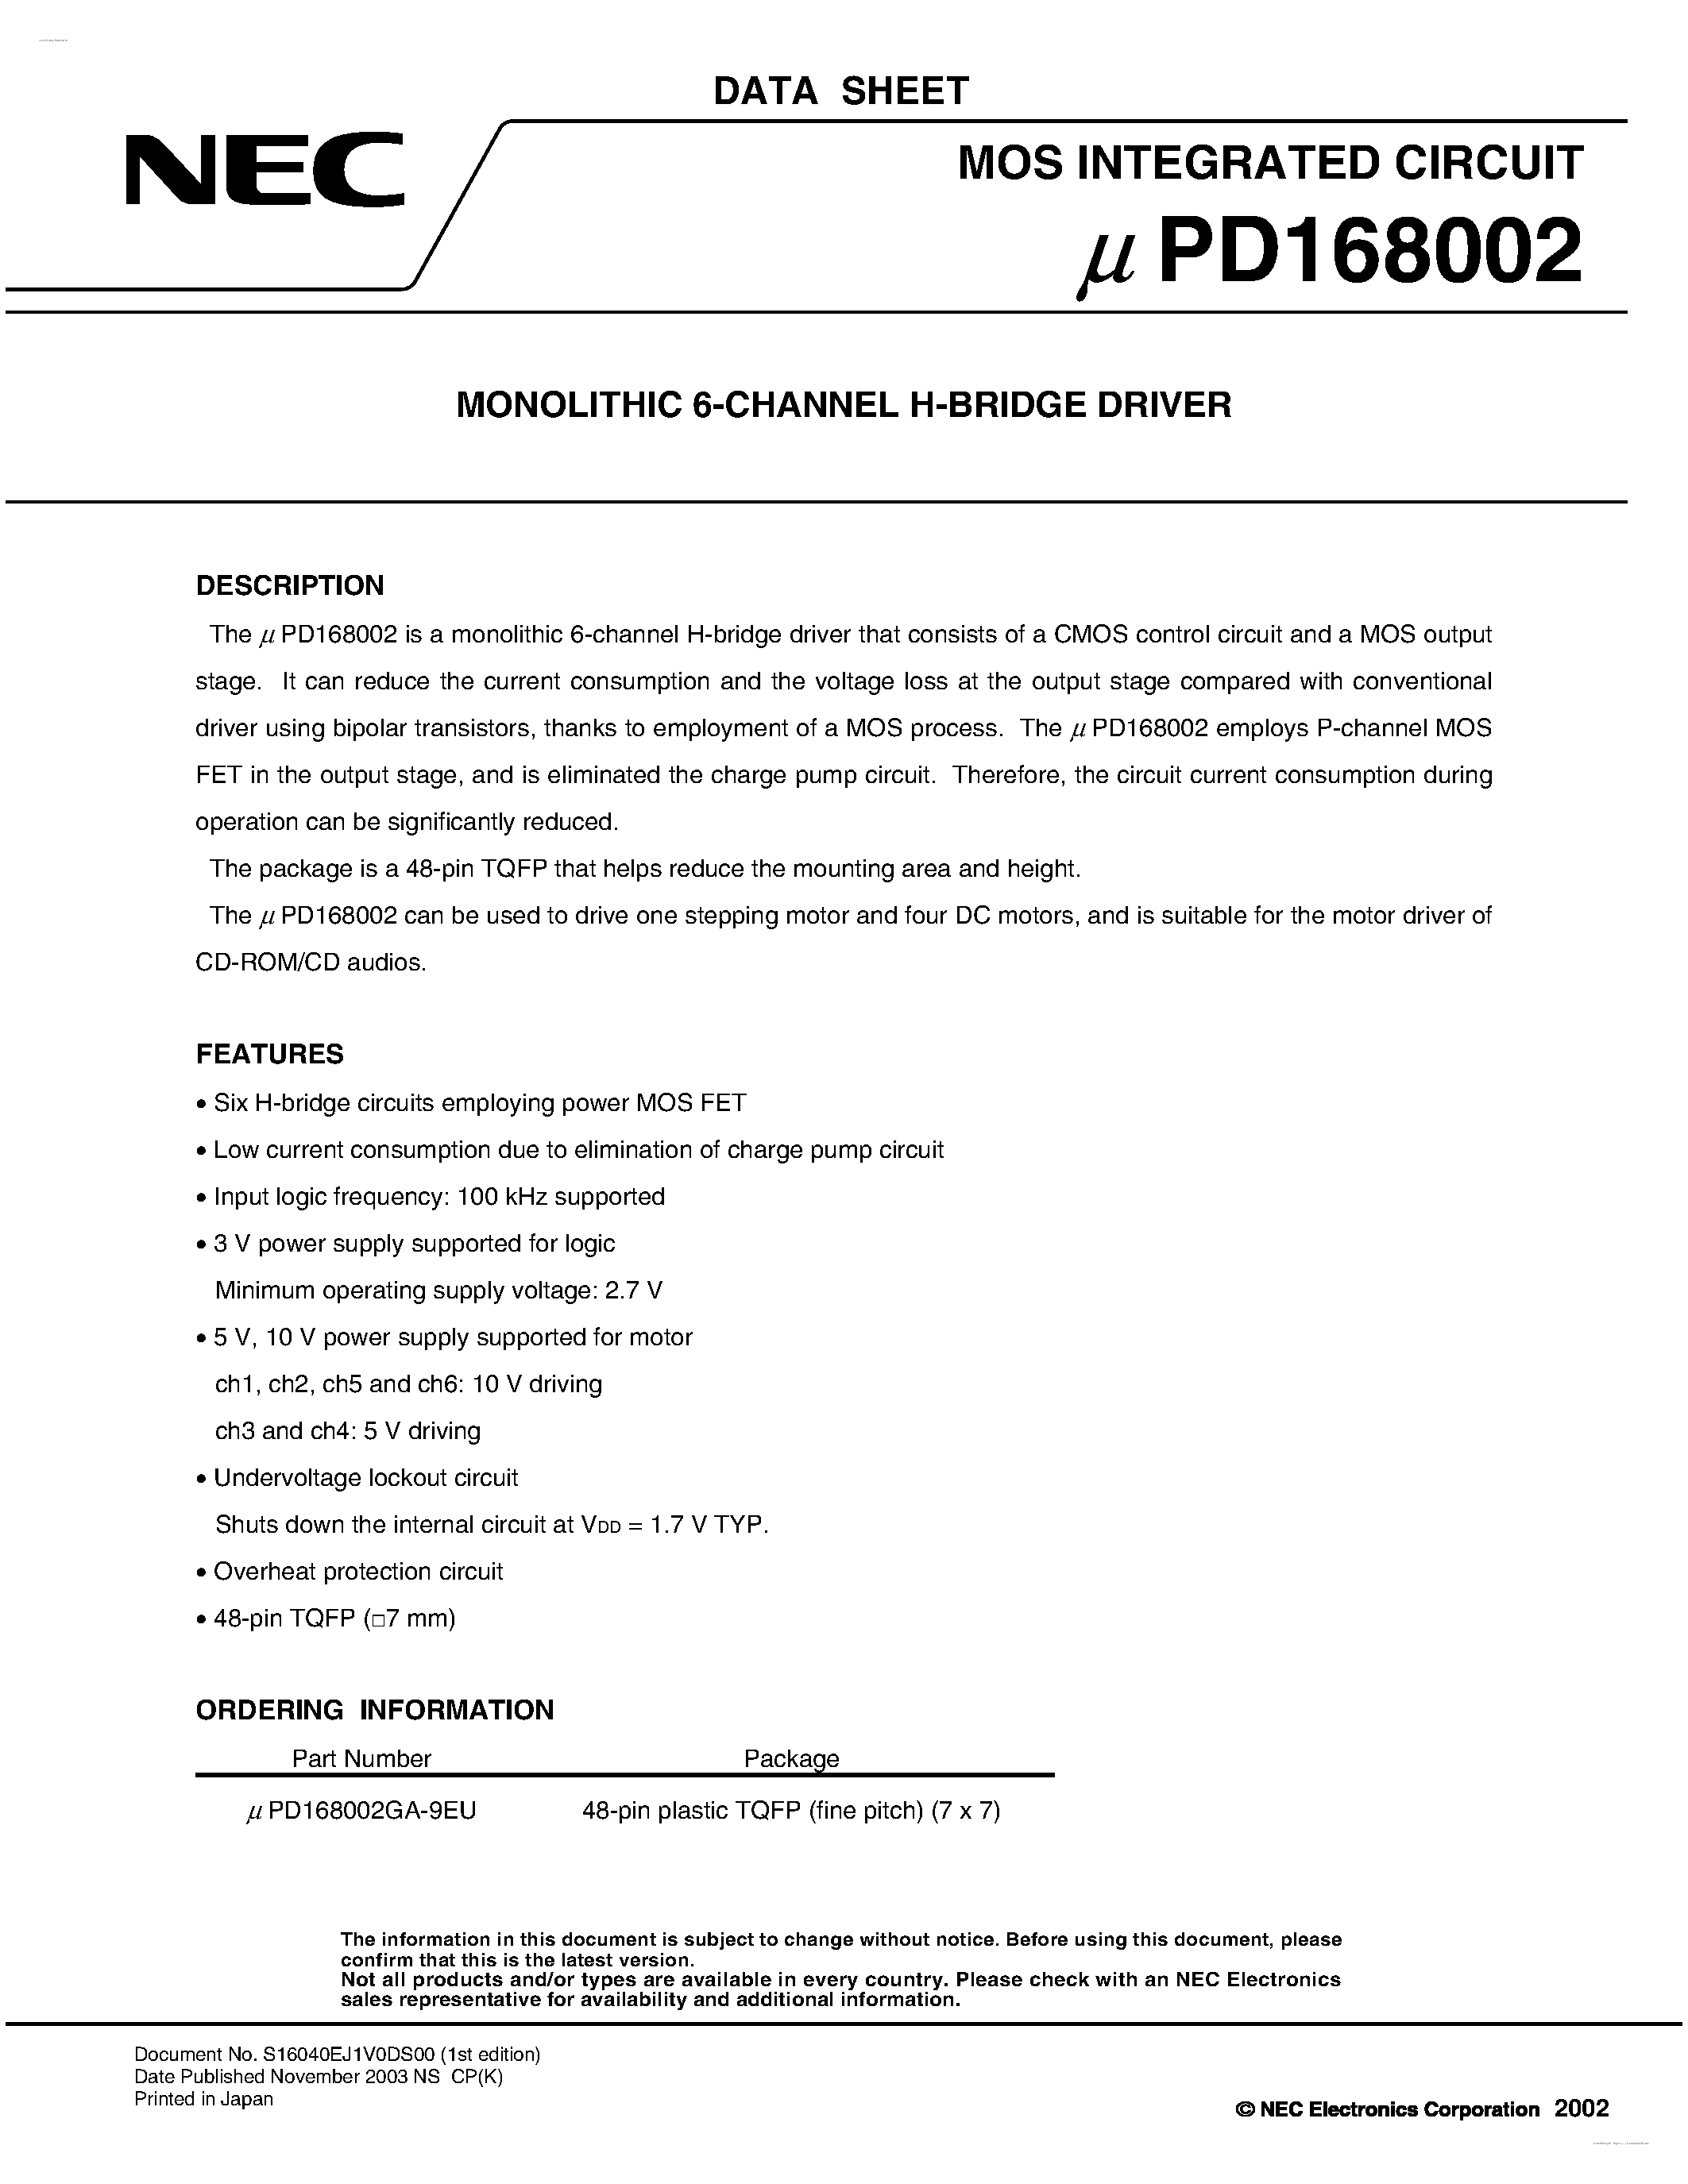 Даташит UPD168002 - MONOLITHIC 6-CHANNEL H-BRIDGE DRIVER страница 1